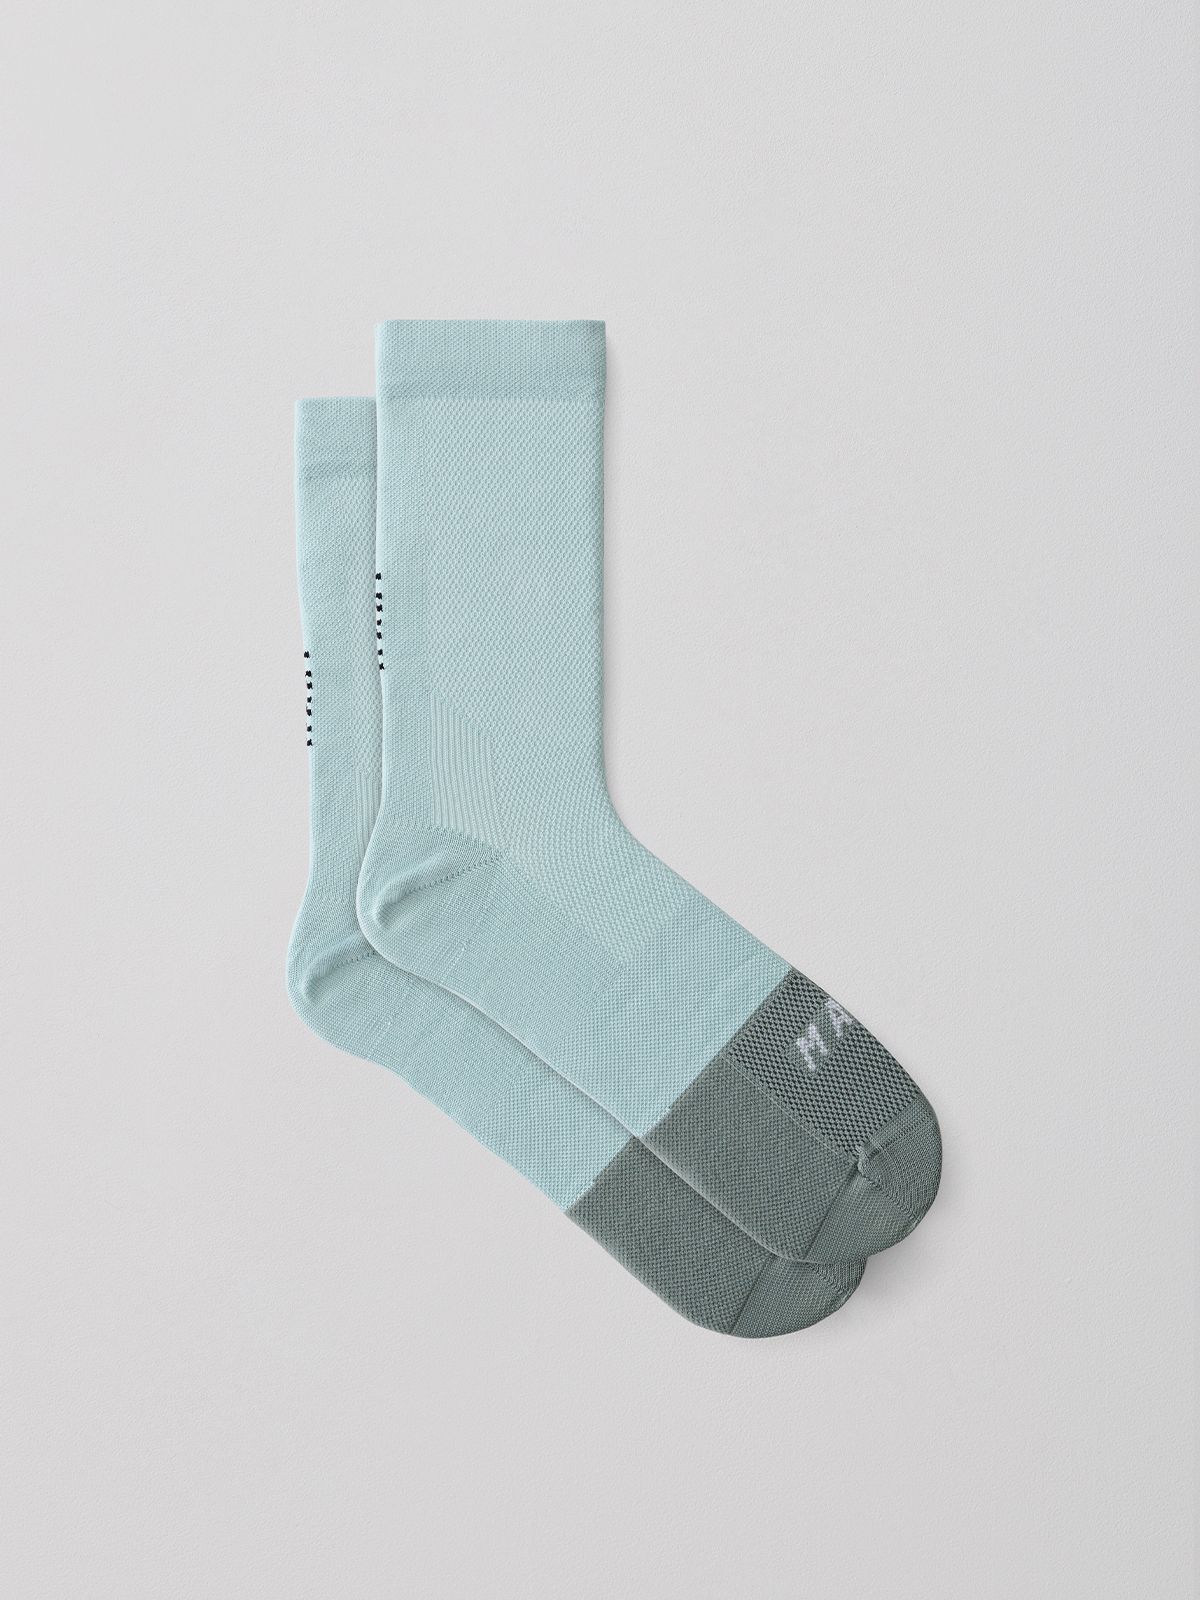 Division Sock (Nimbus)